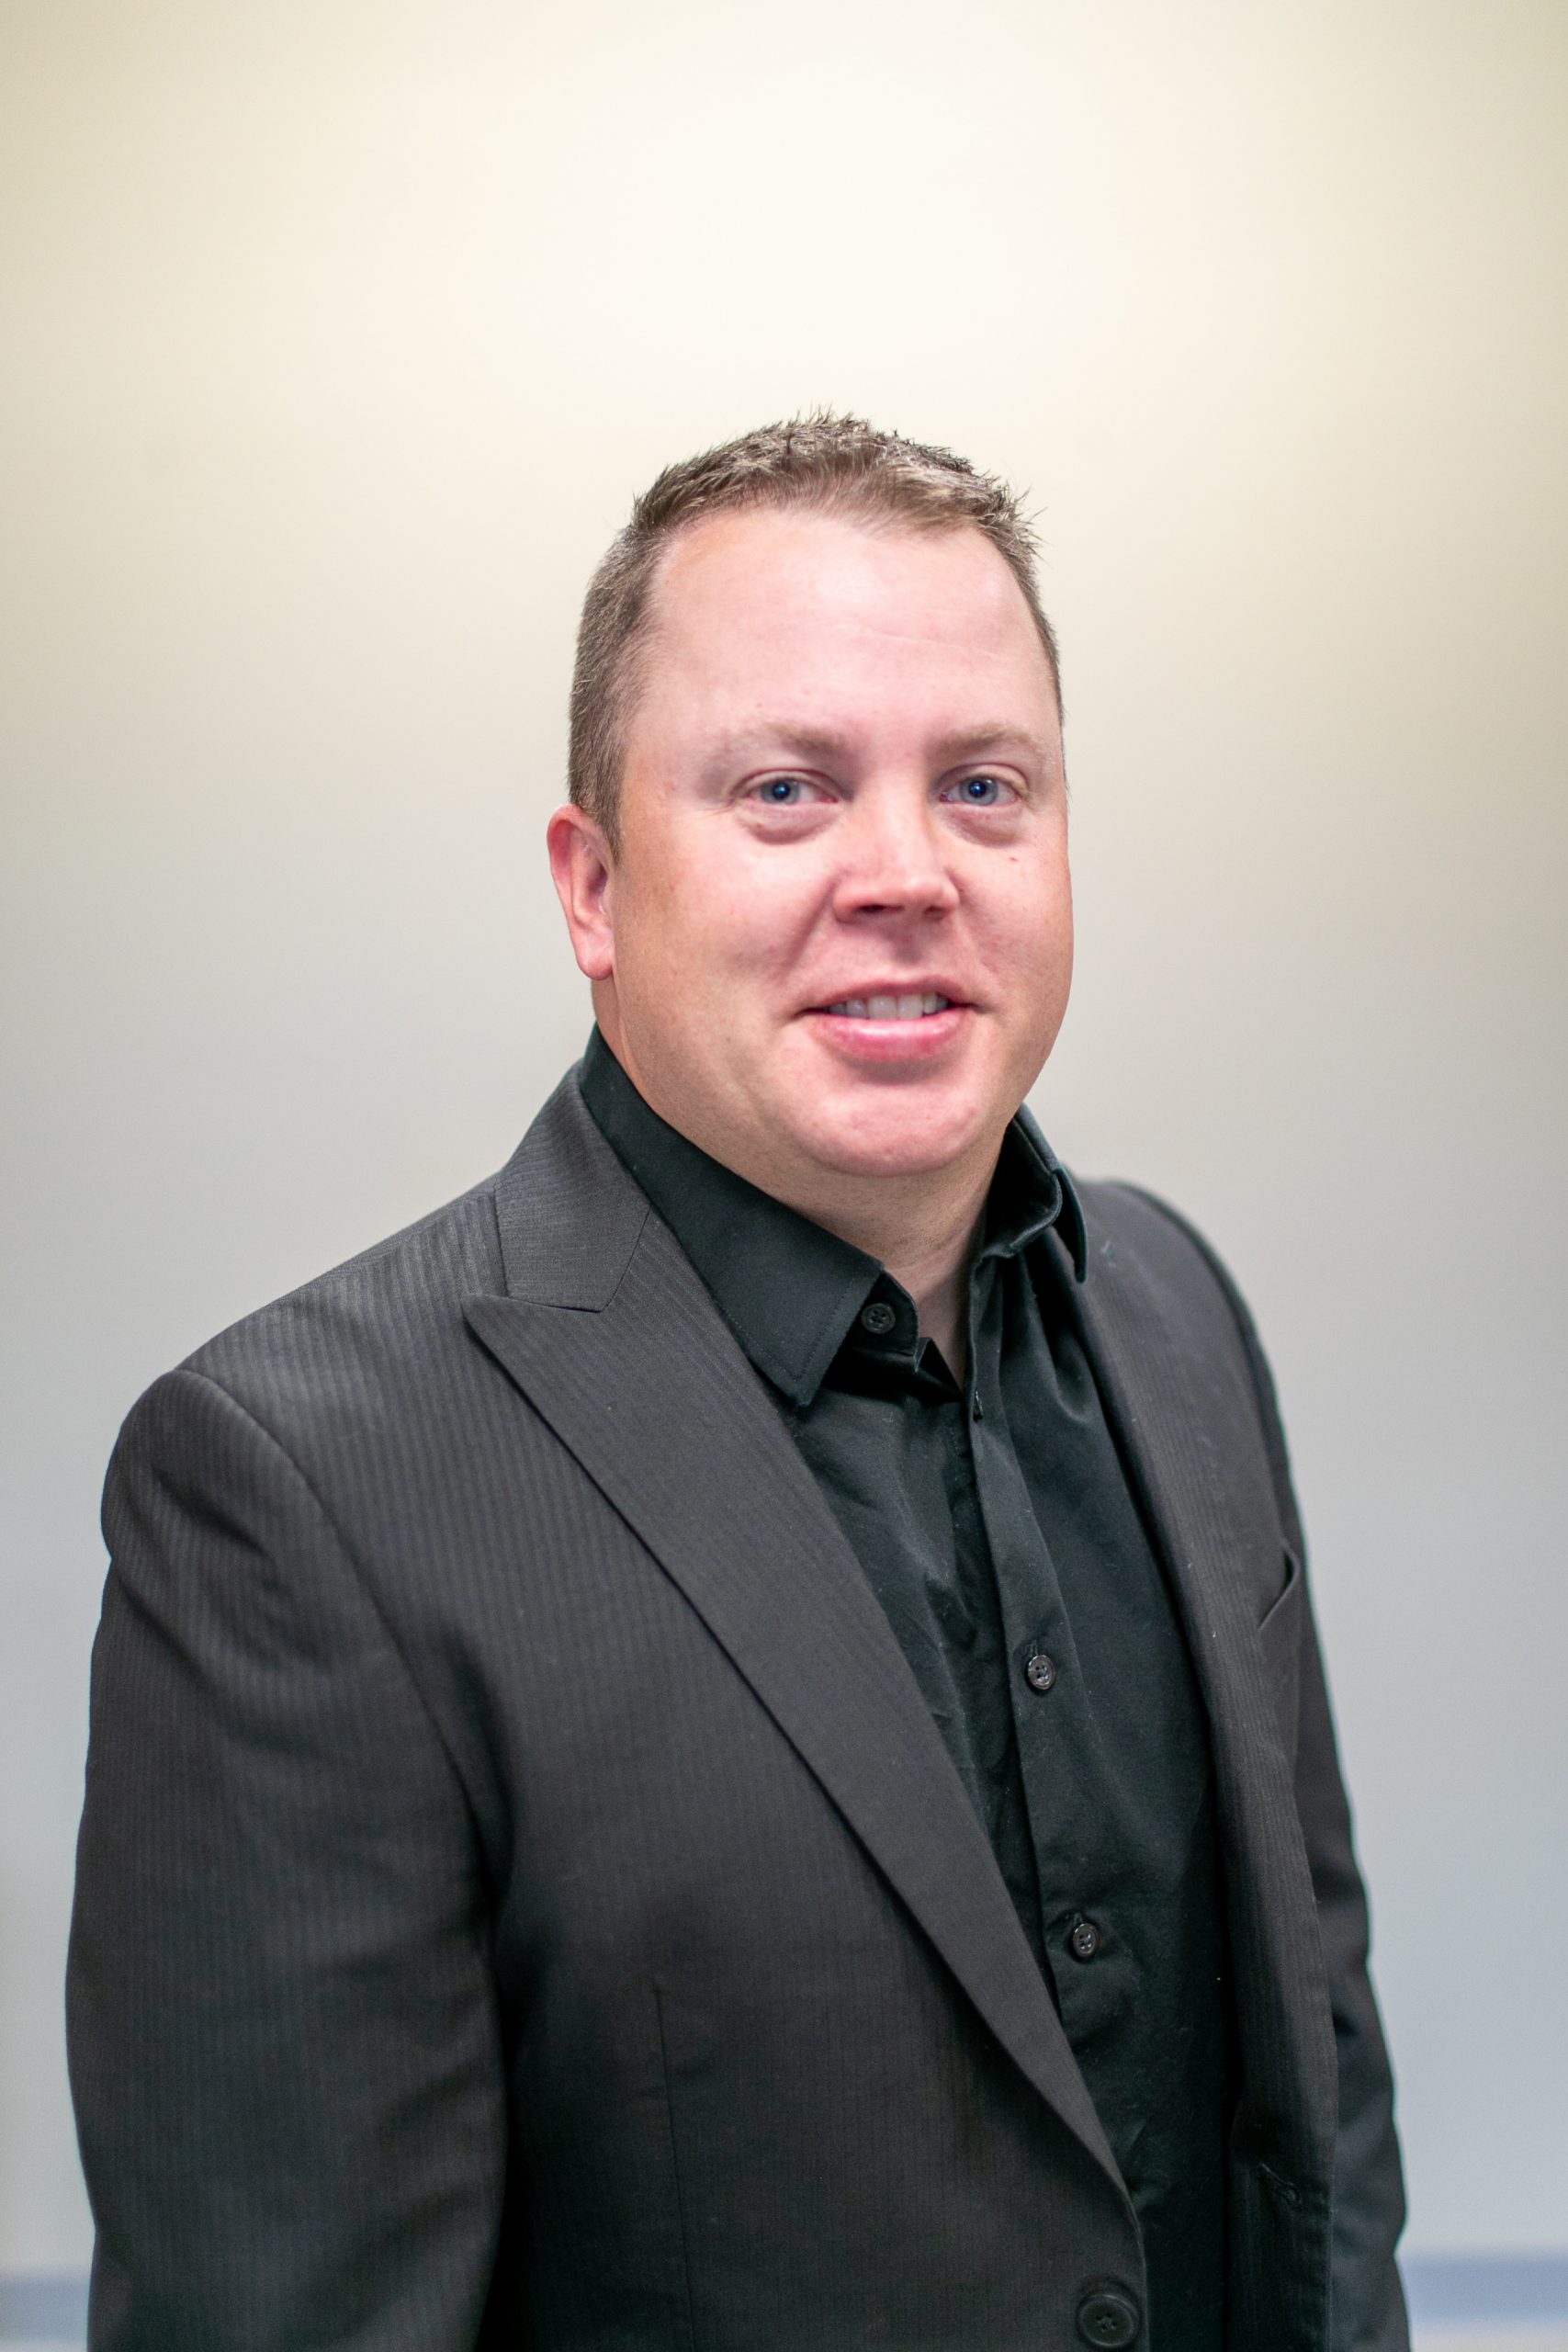 Matt Endres - Director of Finance, LI Group LLC